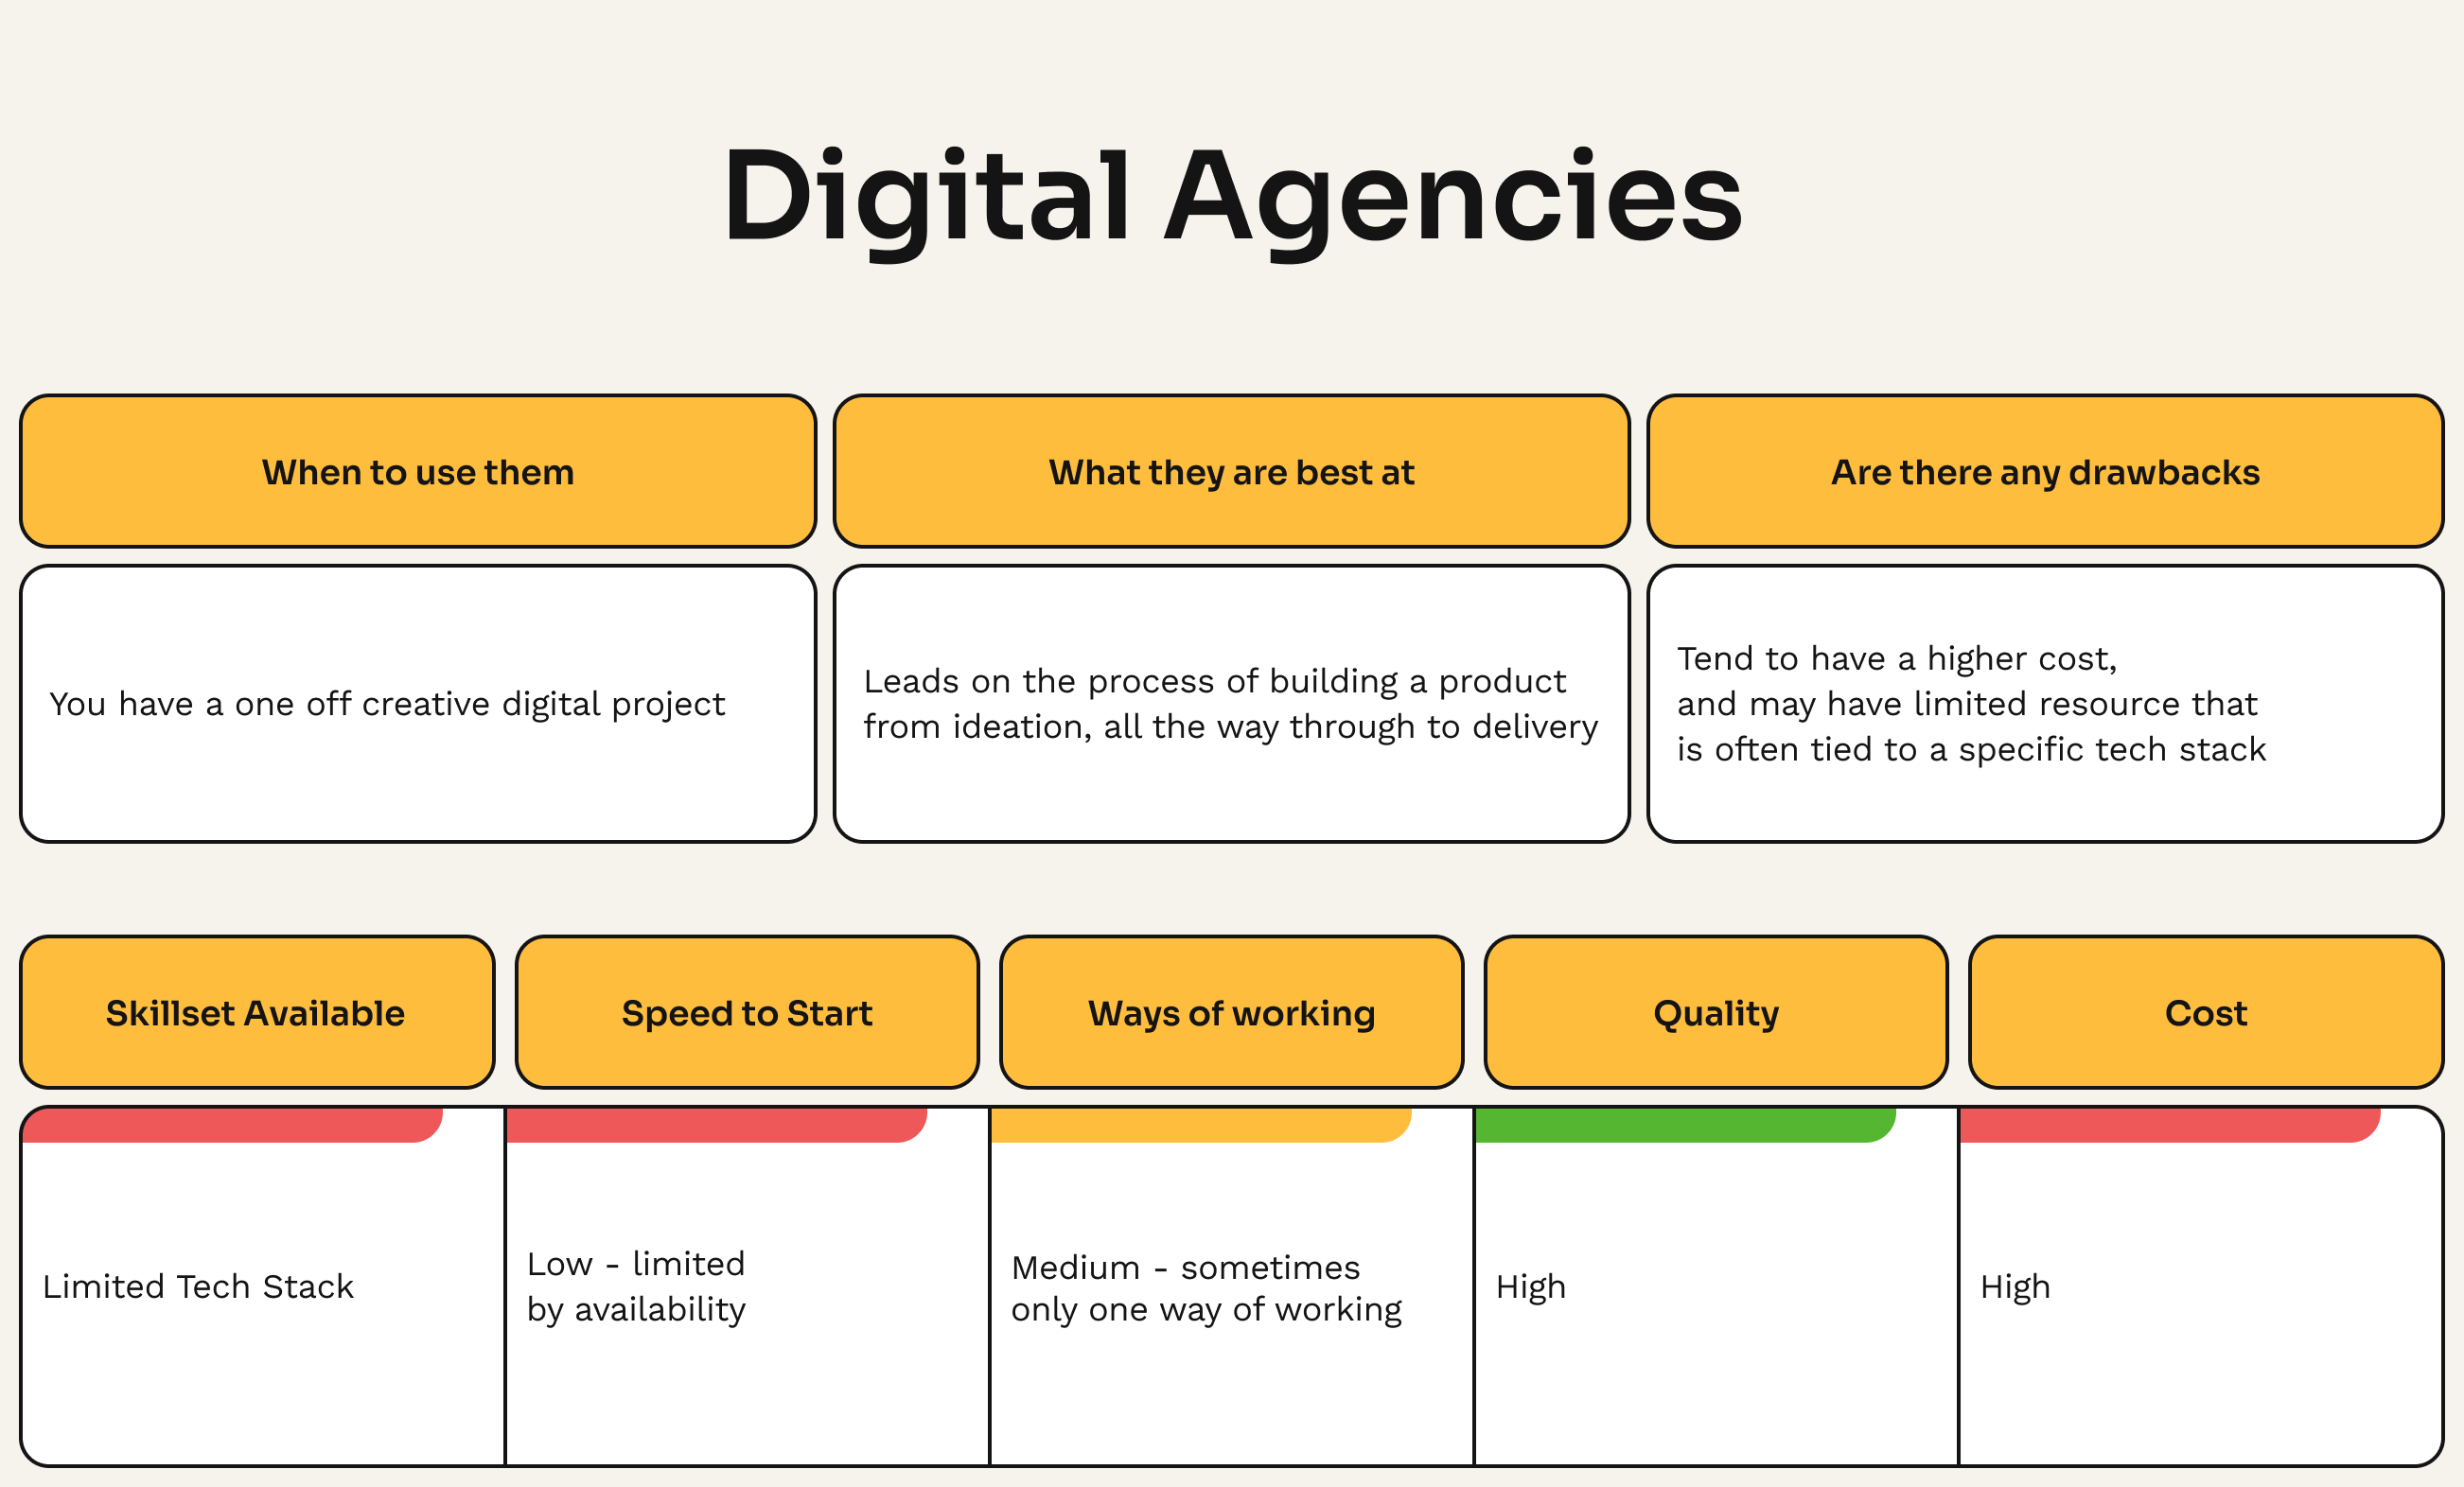 Digital Agencies